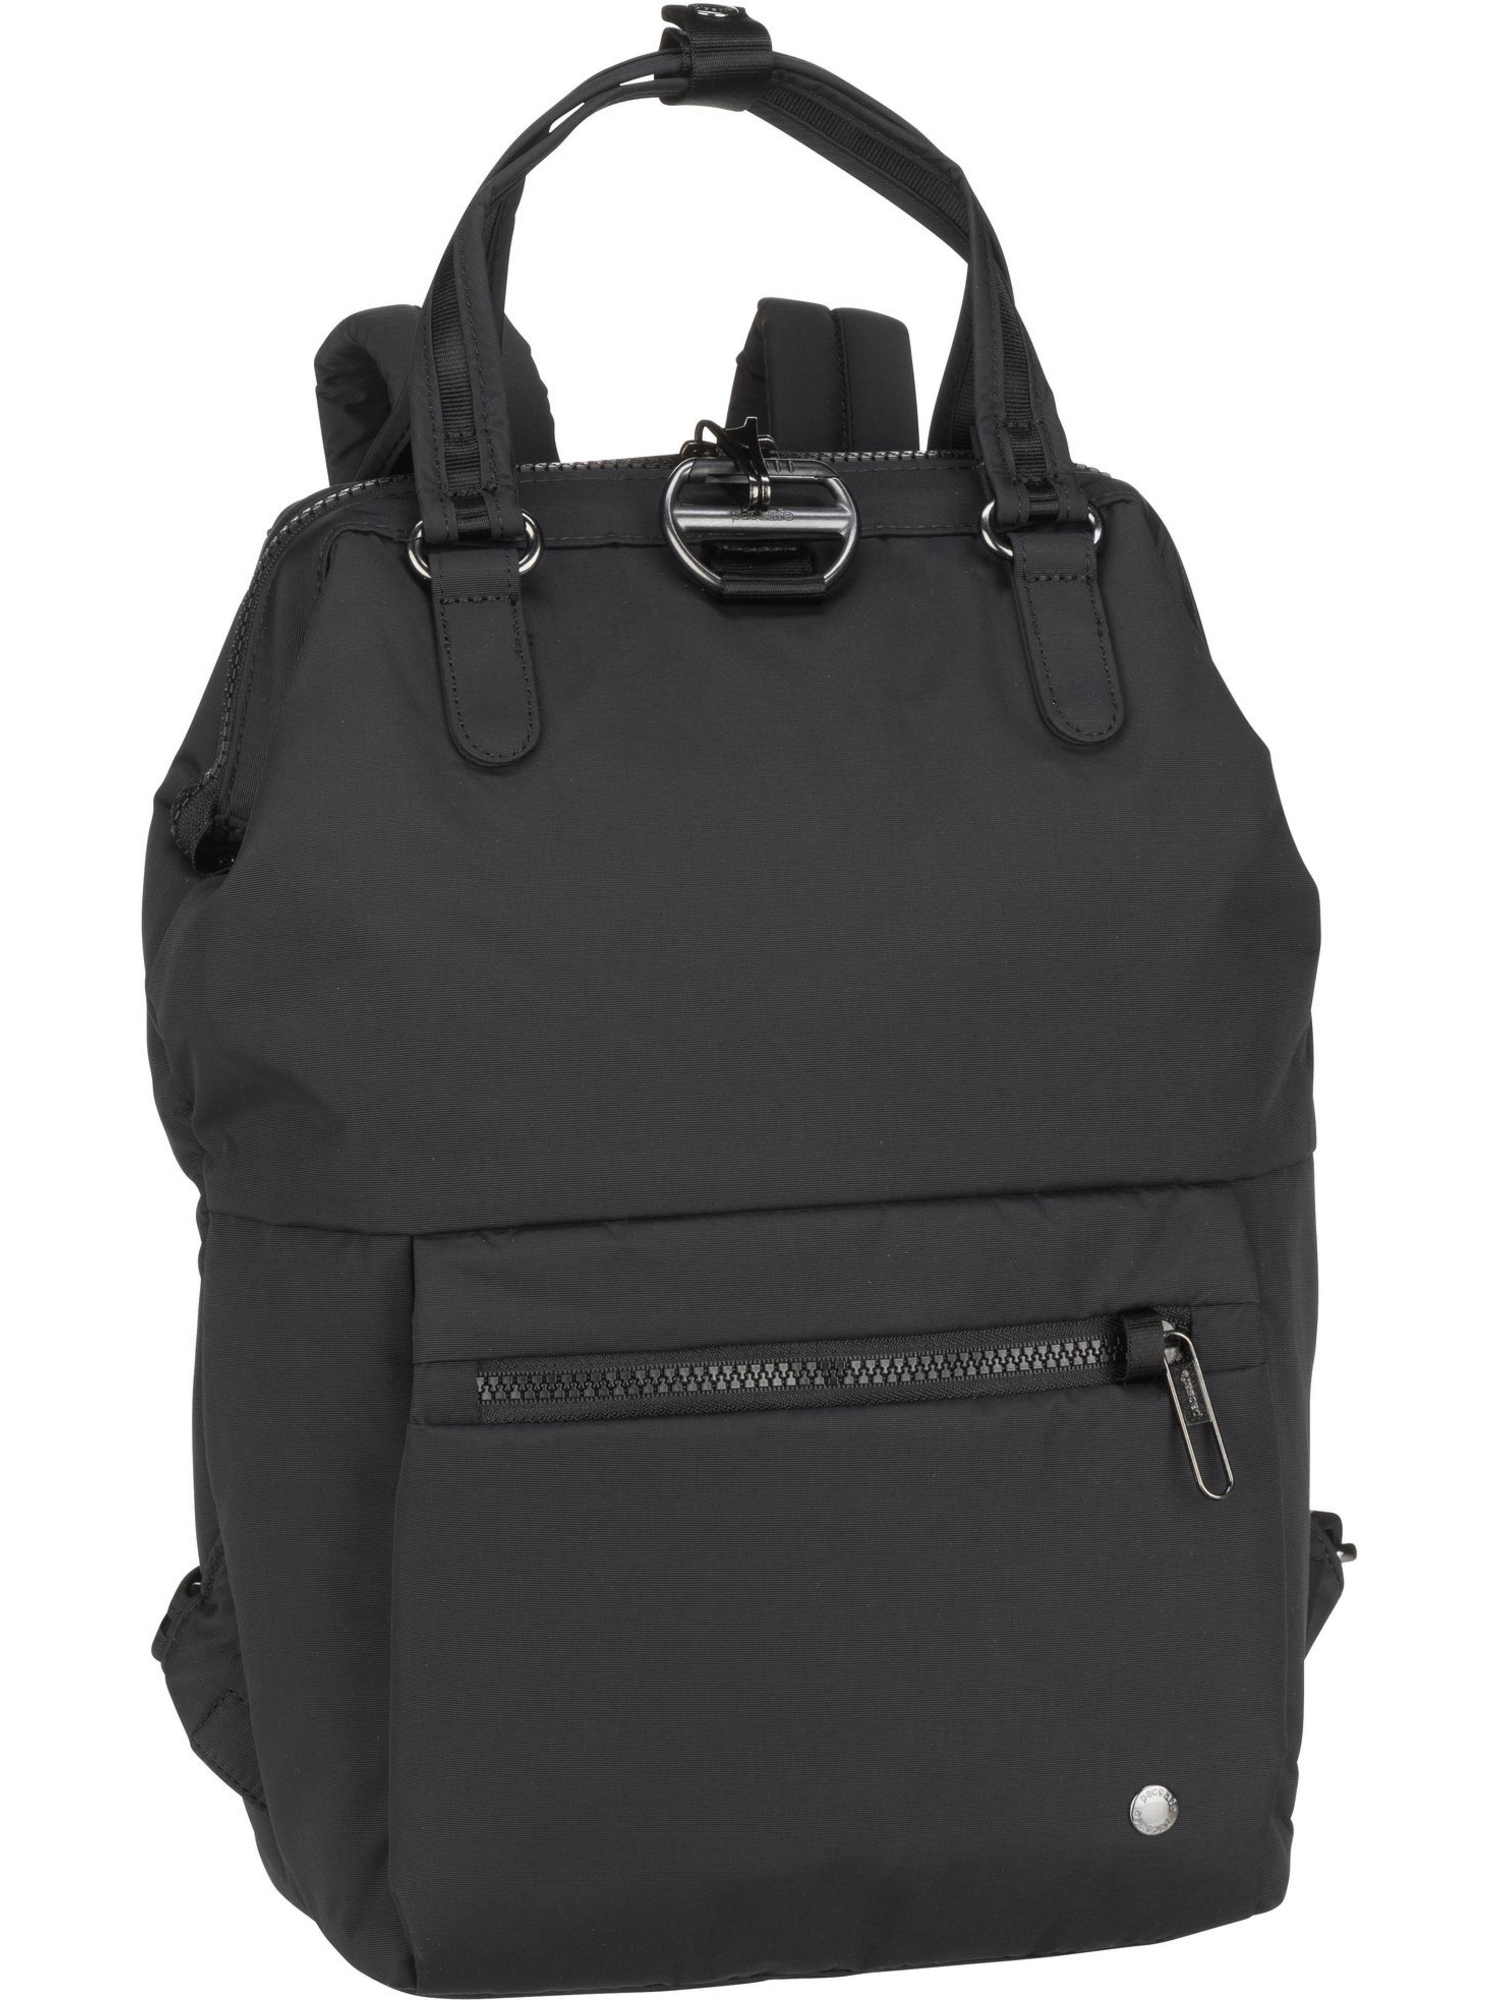 рюкзак pacsafe backpack citysafe cx mini backpack эконил черный Рюкзак Pacsafe/Backpack Citysafe CX Mini Backpack, эконил черный